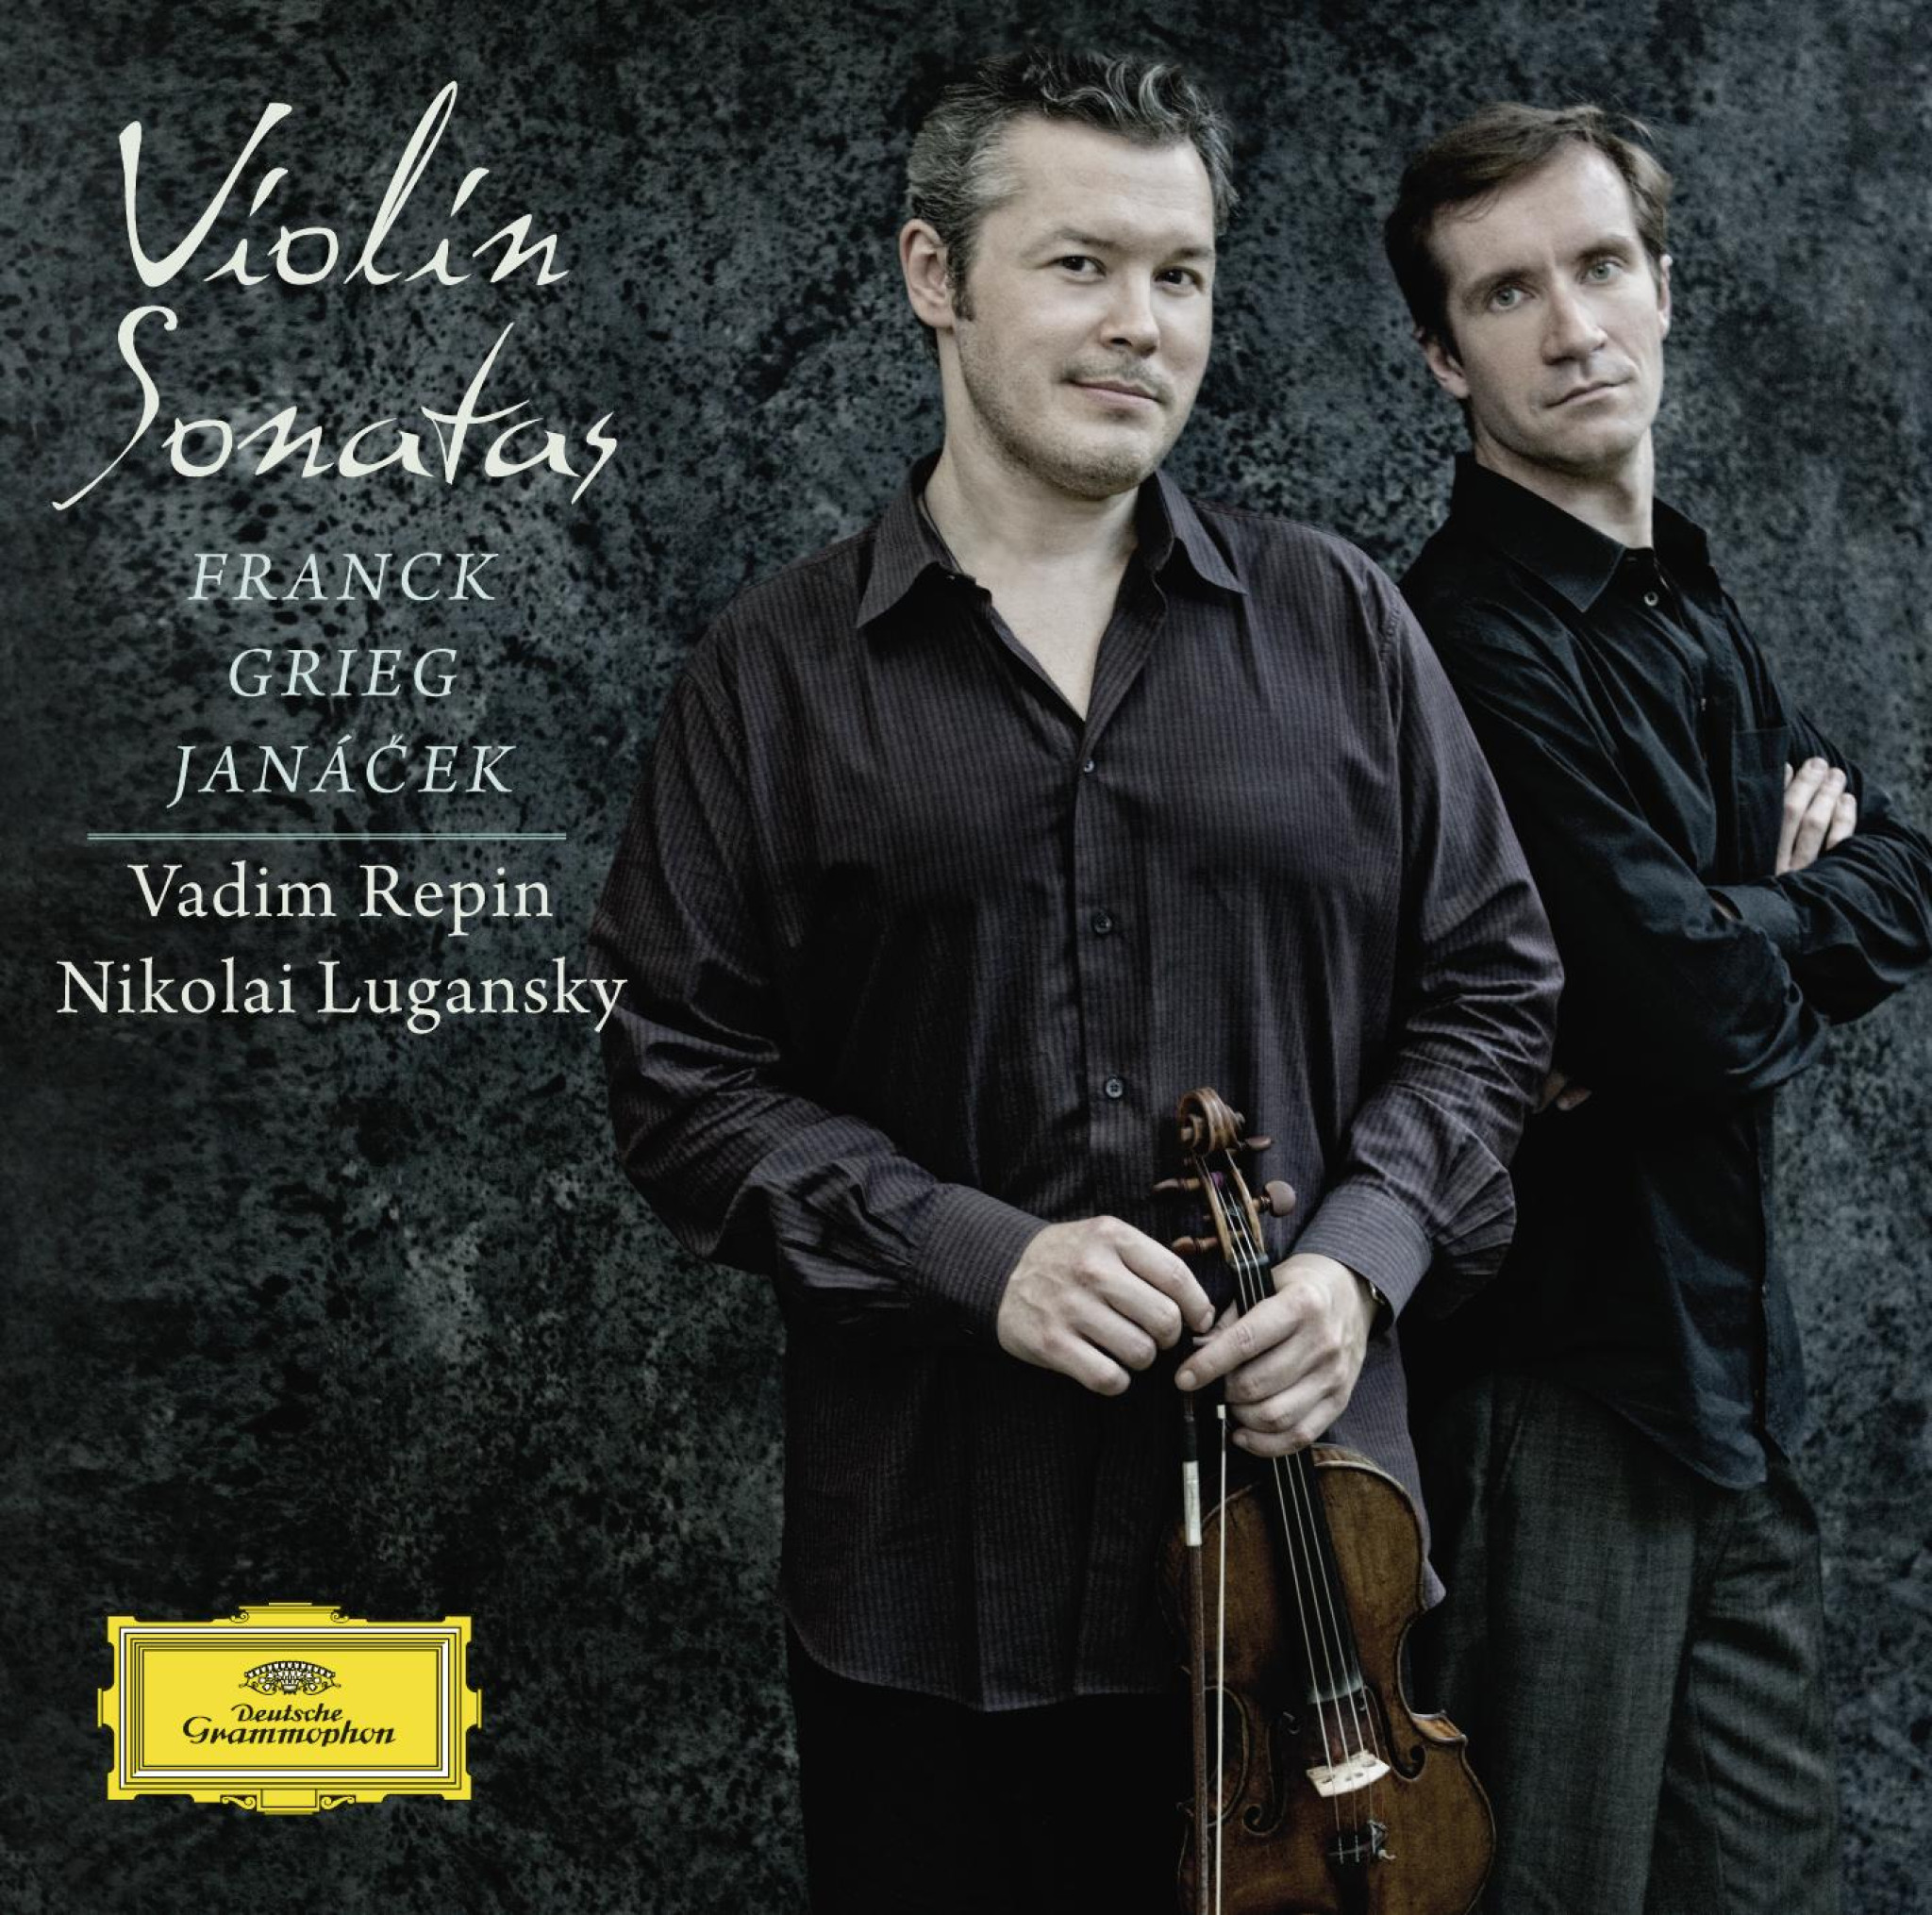 Violin Sonatas - Franck, Grieg, Janácek